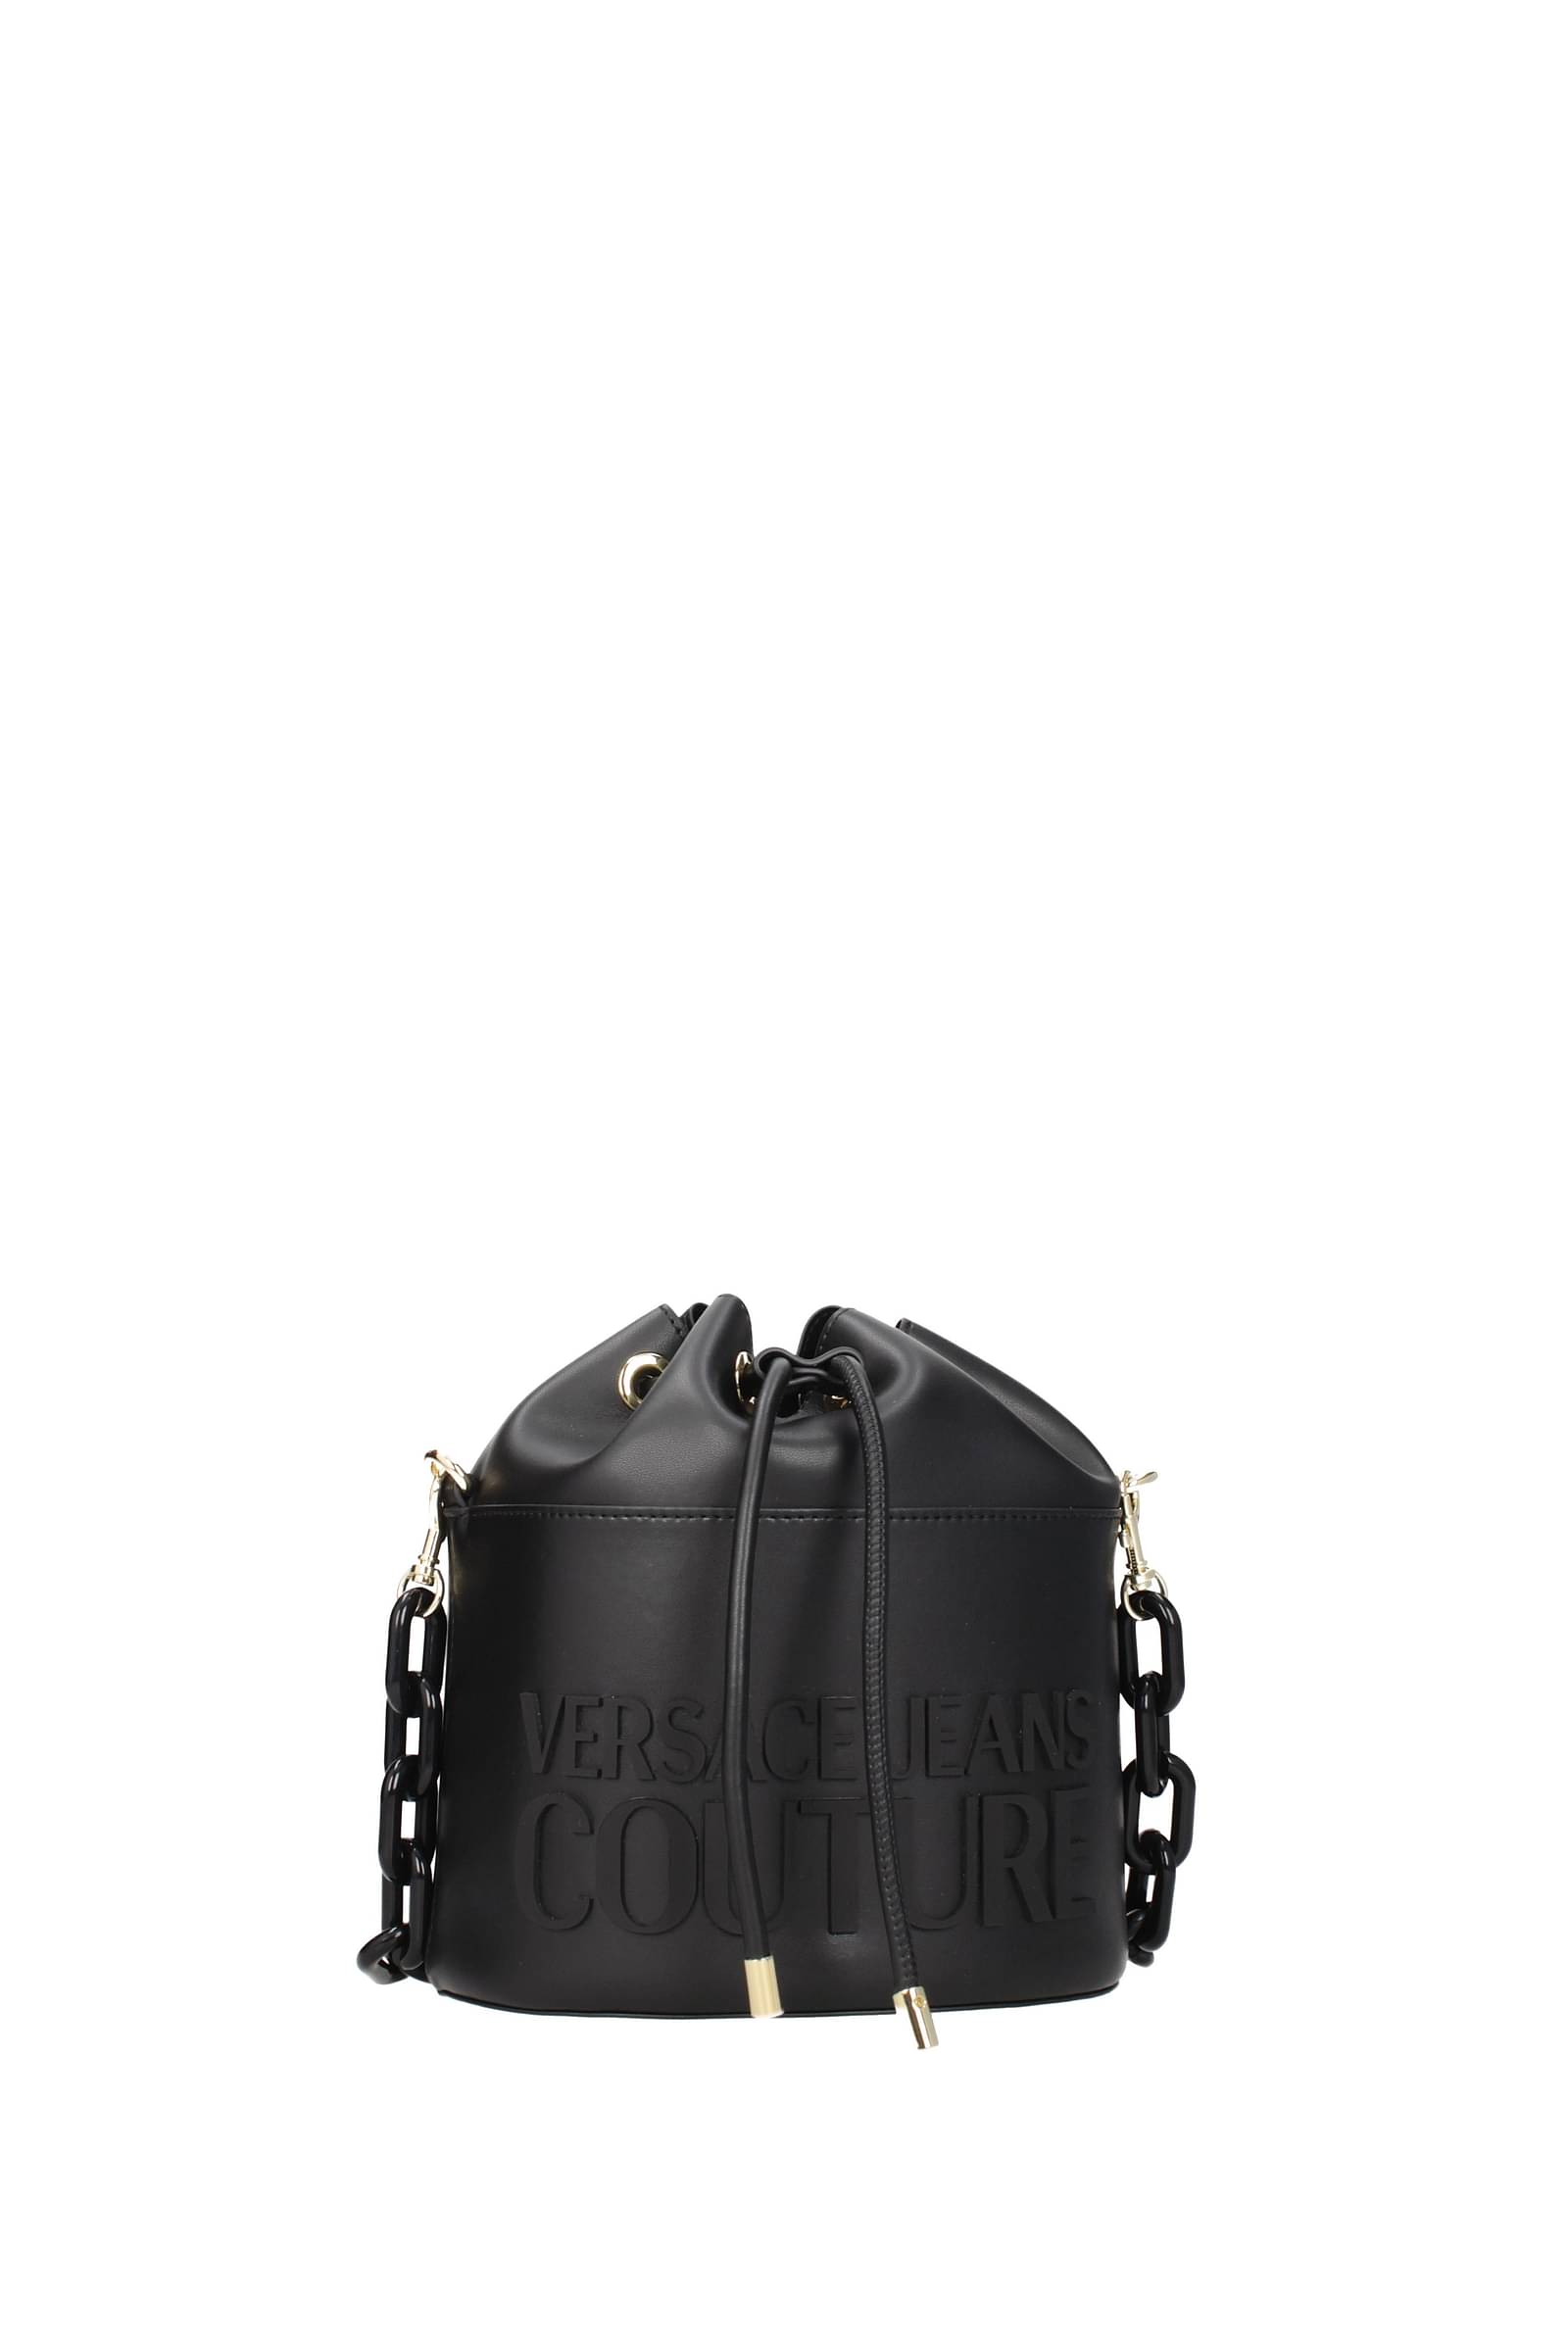 Buy Versace Handbag Jeans Couture Shoulder Bag With Box 521 (J415)